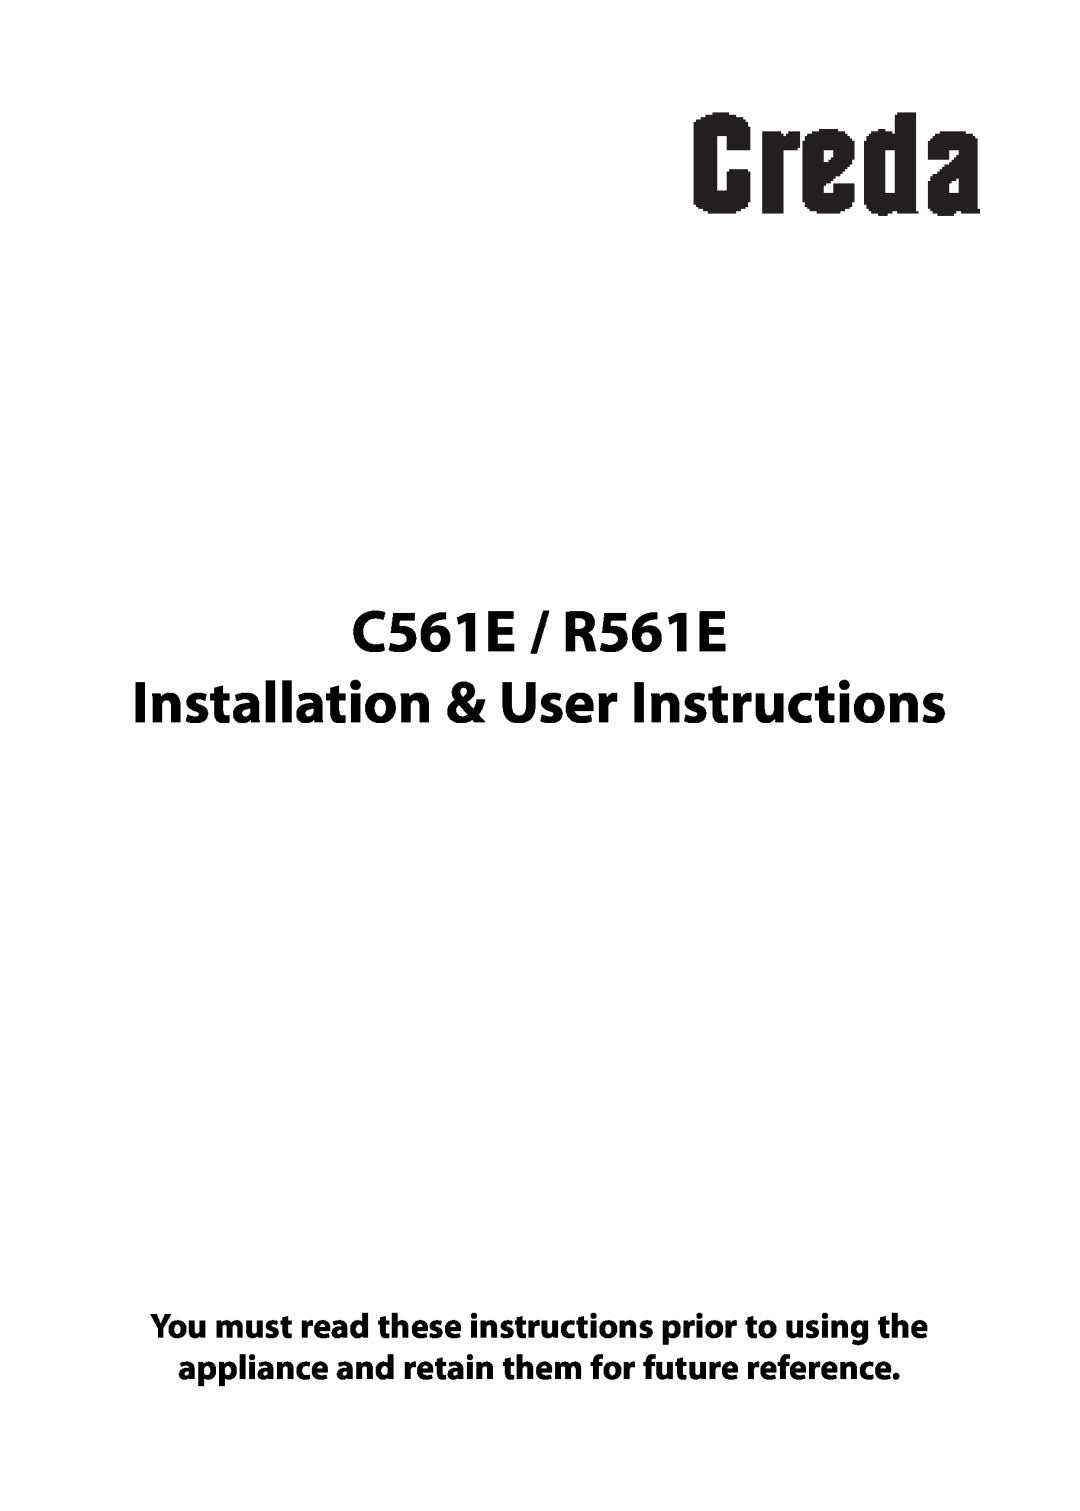 Creda C561E/R561E manual C561E / R561E Installation & User Instructions 